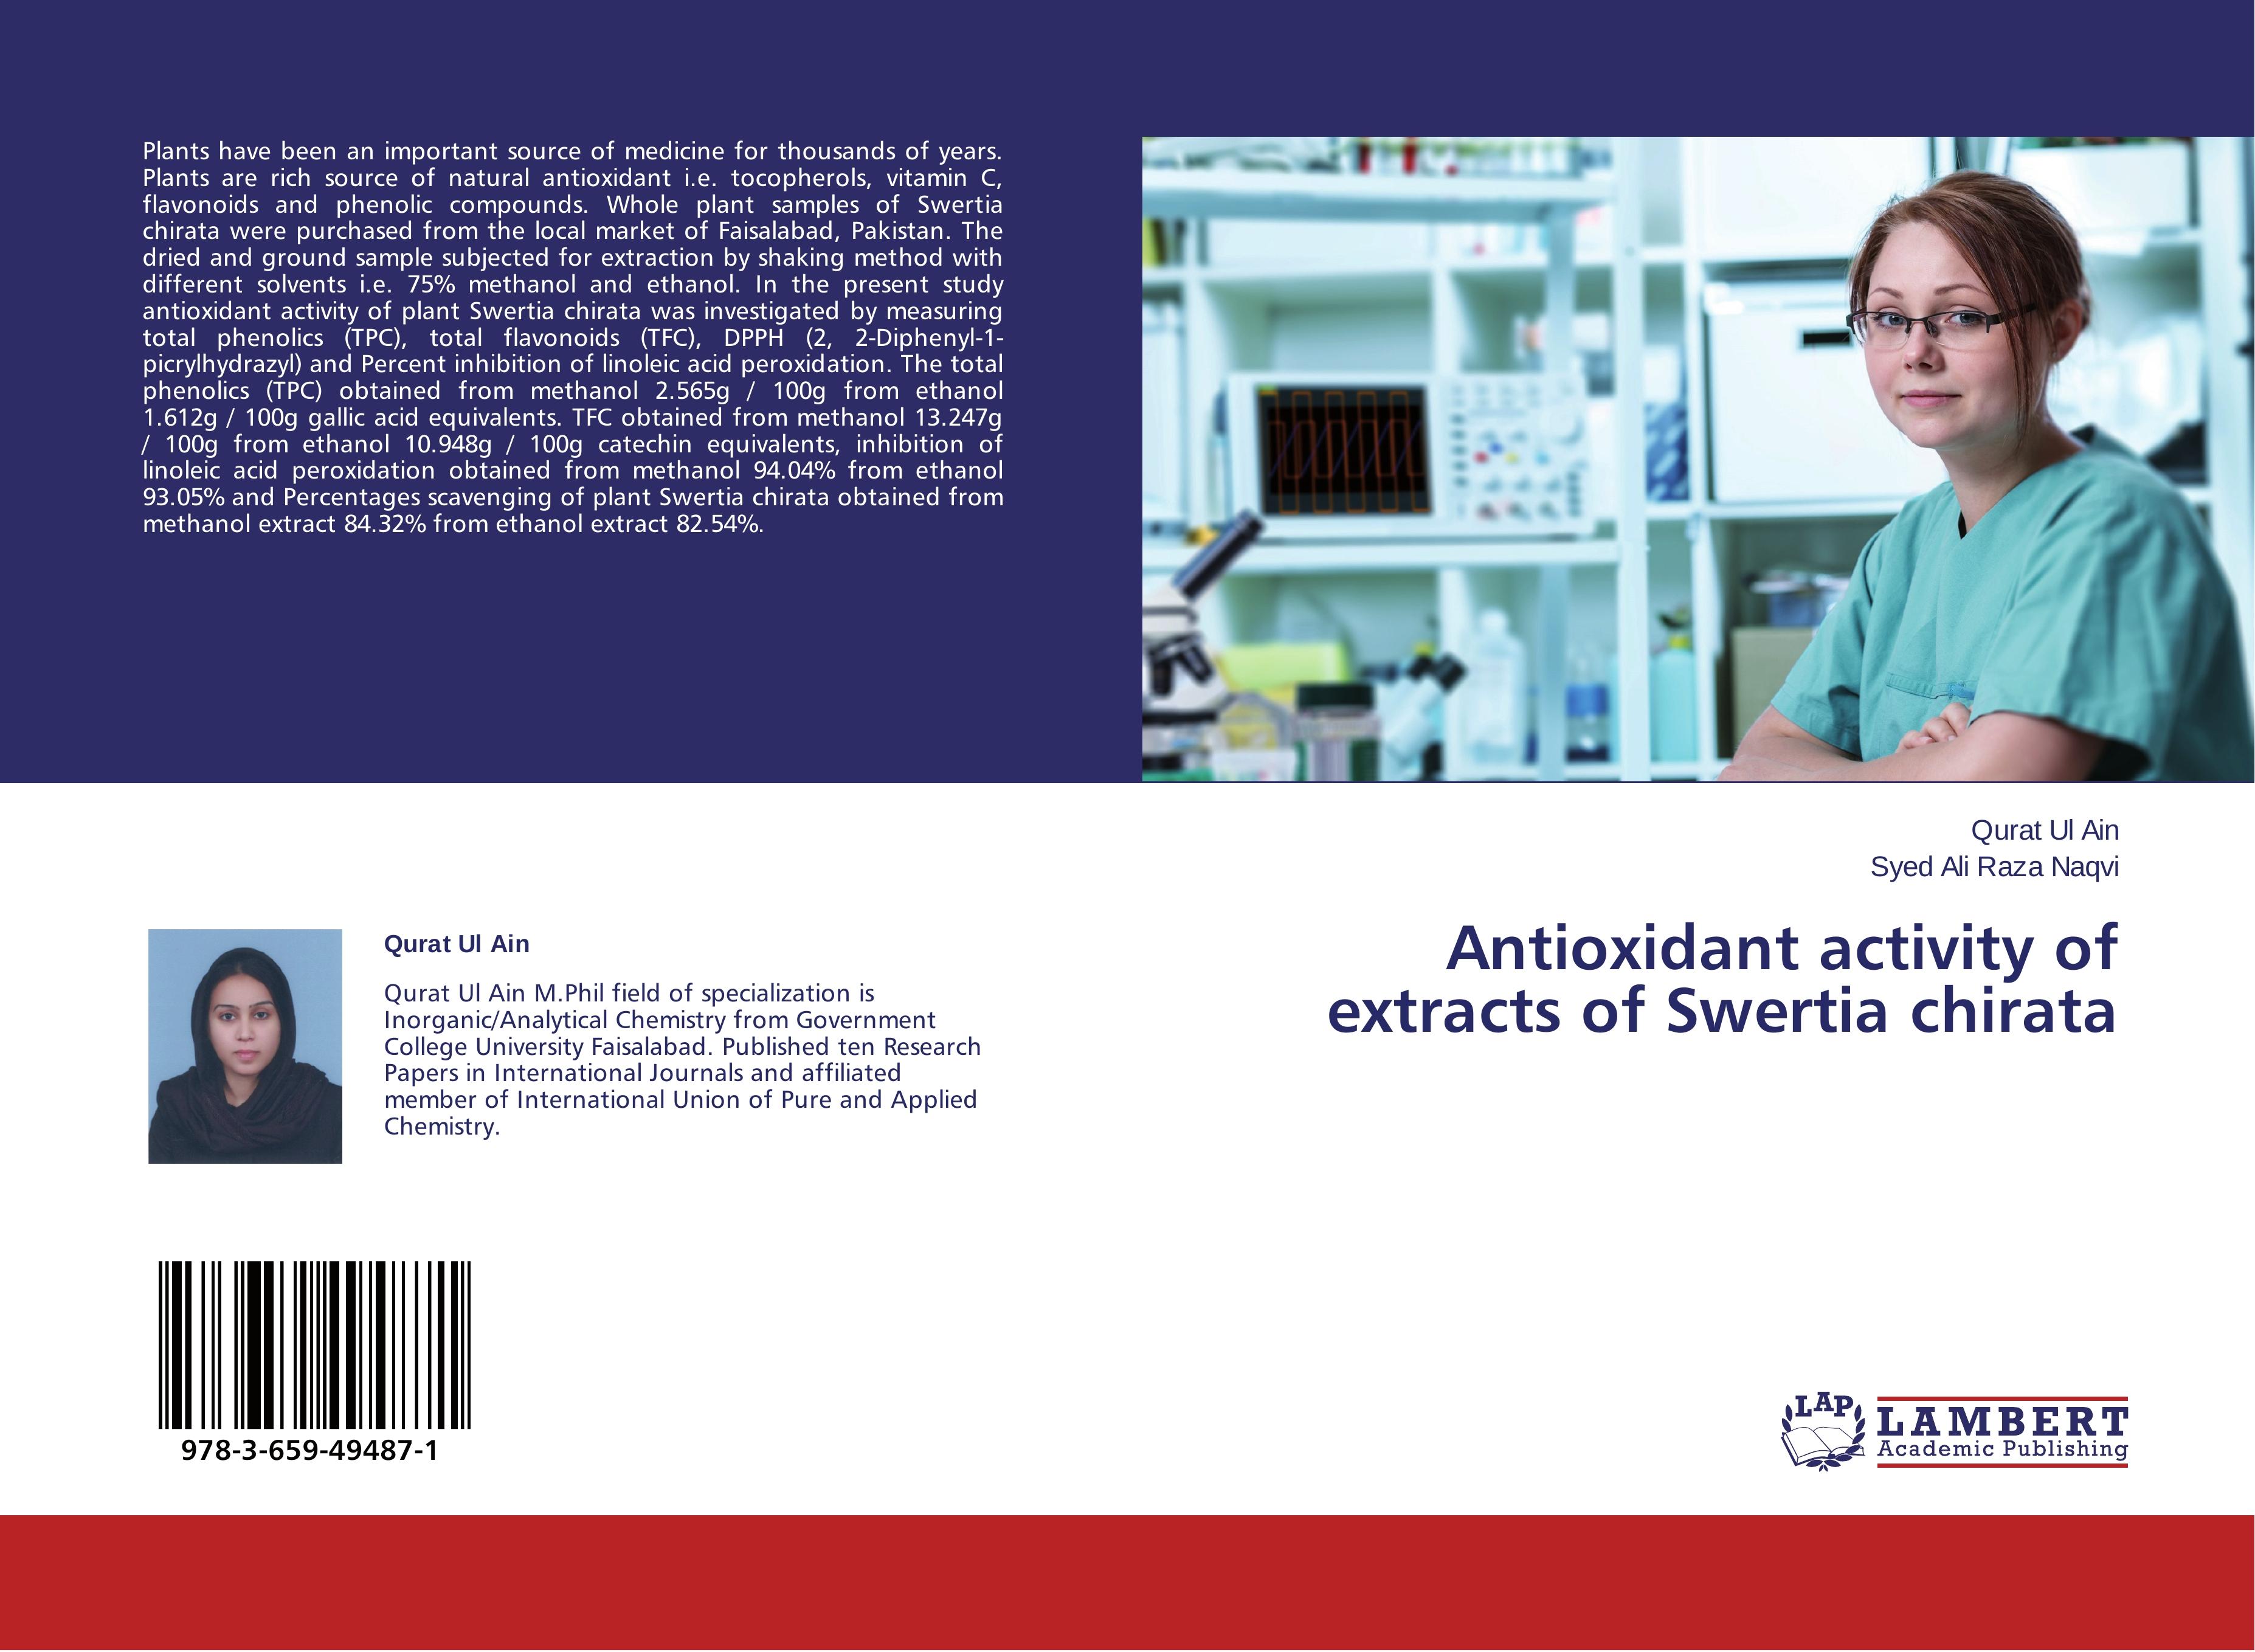 Antioxidant activity of extracts of Swertia chirata - Qurat Ul Ain Syed Ali Raza Naqvi